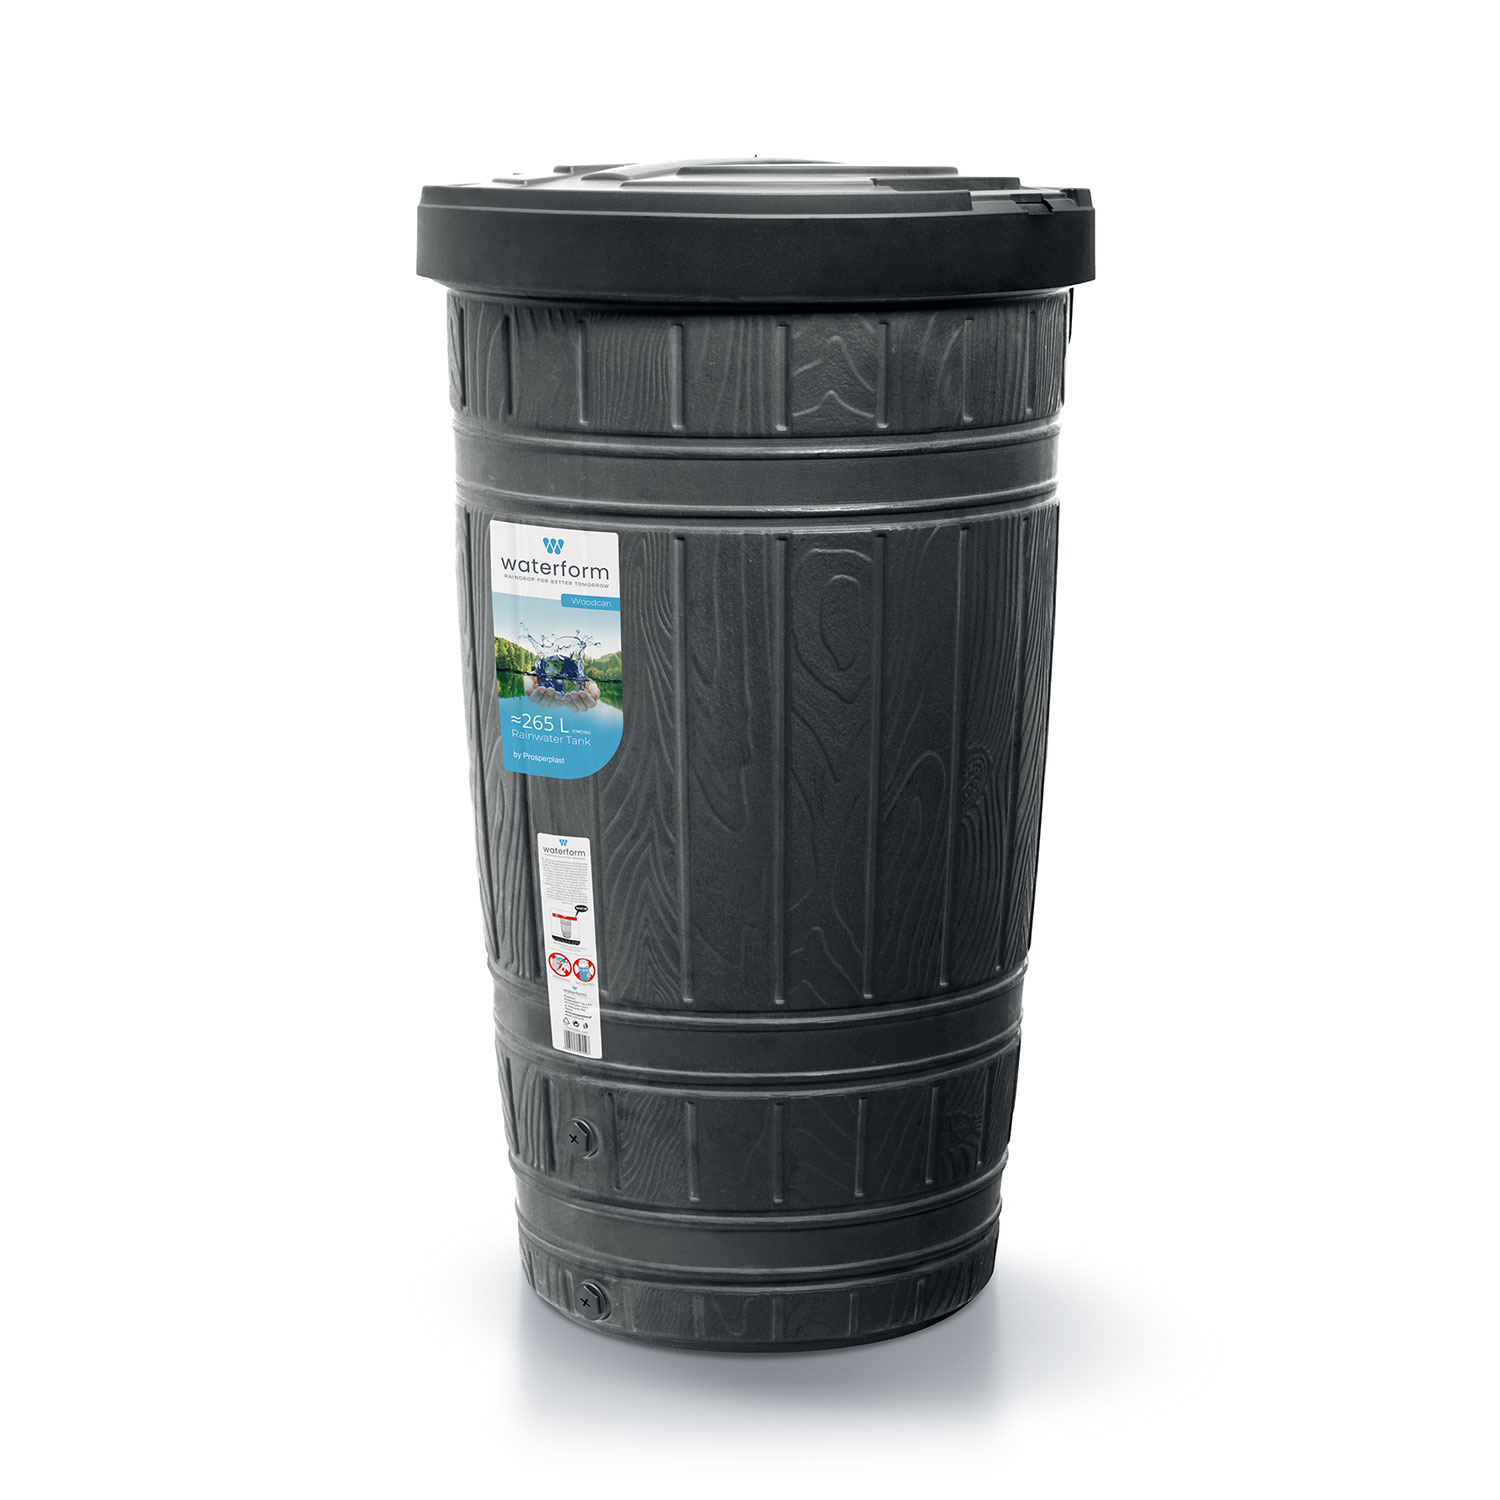 Waterform Woodcan rainwater tank IDWO265 Black